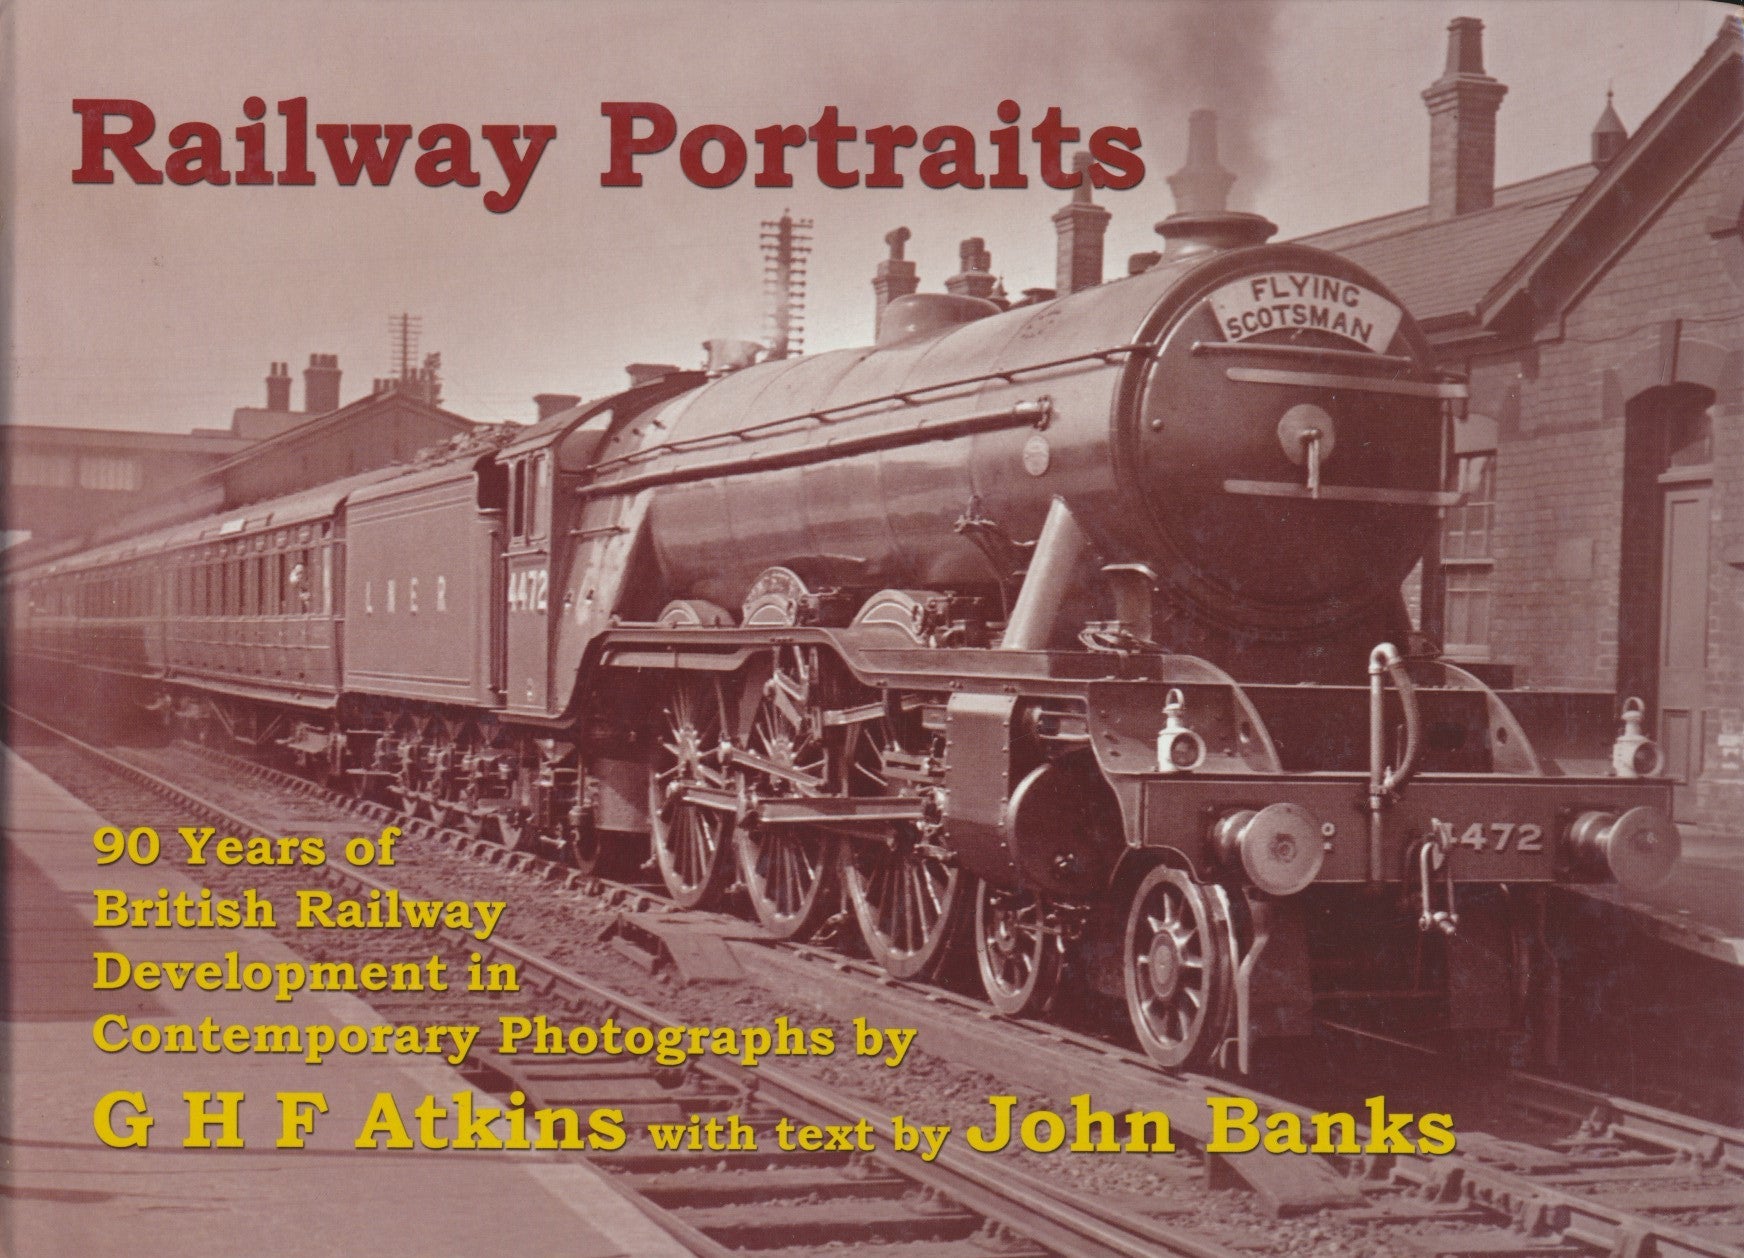 Railway Portraits, 90 Years of British Railway Development in Contemporary Photographs